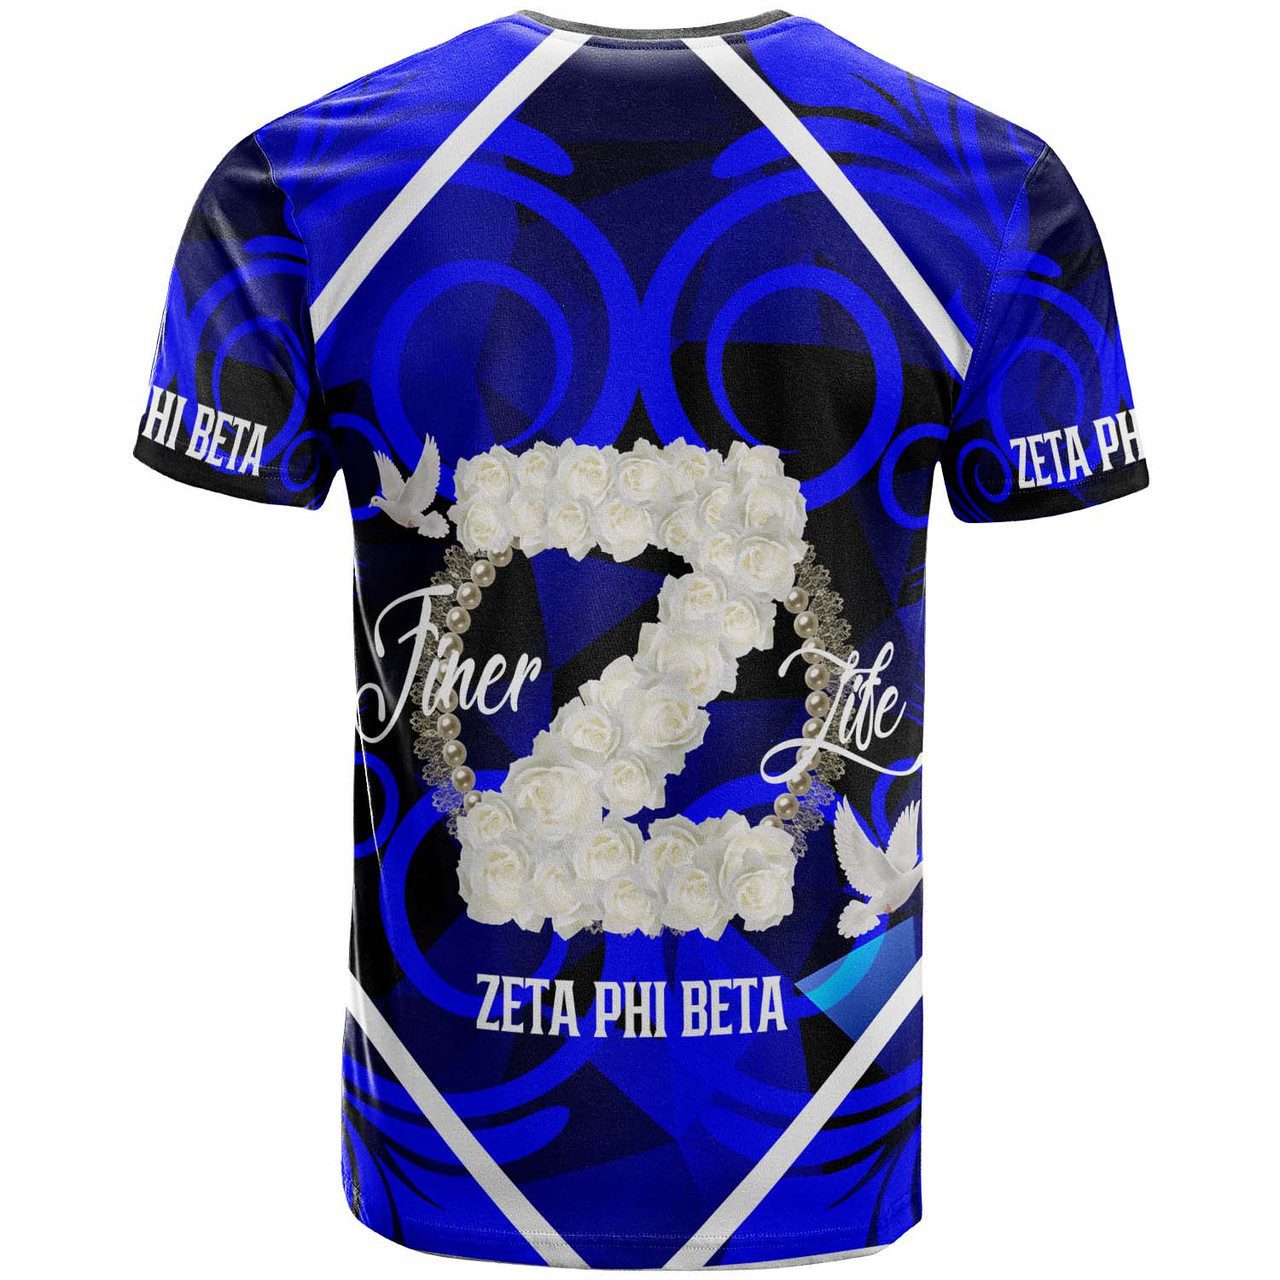 Zeta Phi Beta T-shirt – Sorority Zeta Phi Beta White Rose and Dove Pride T-shirt